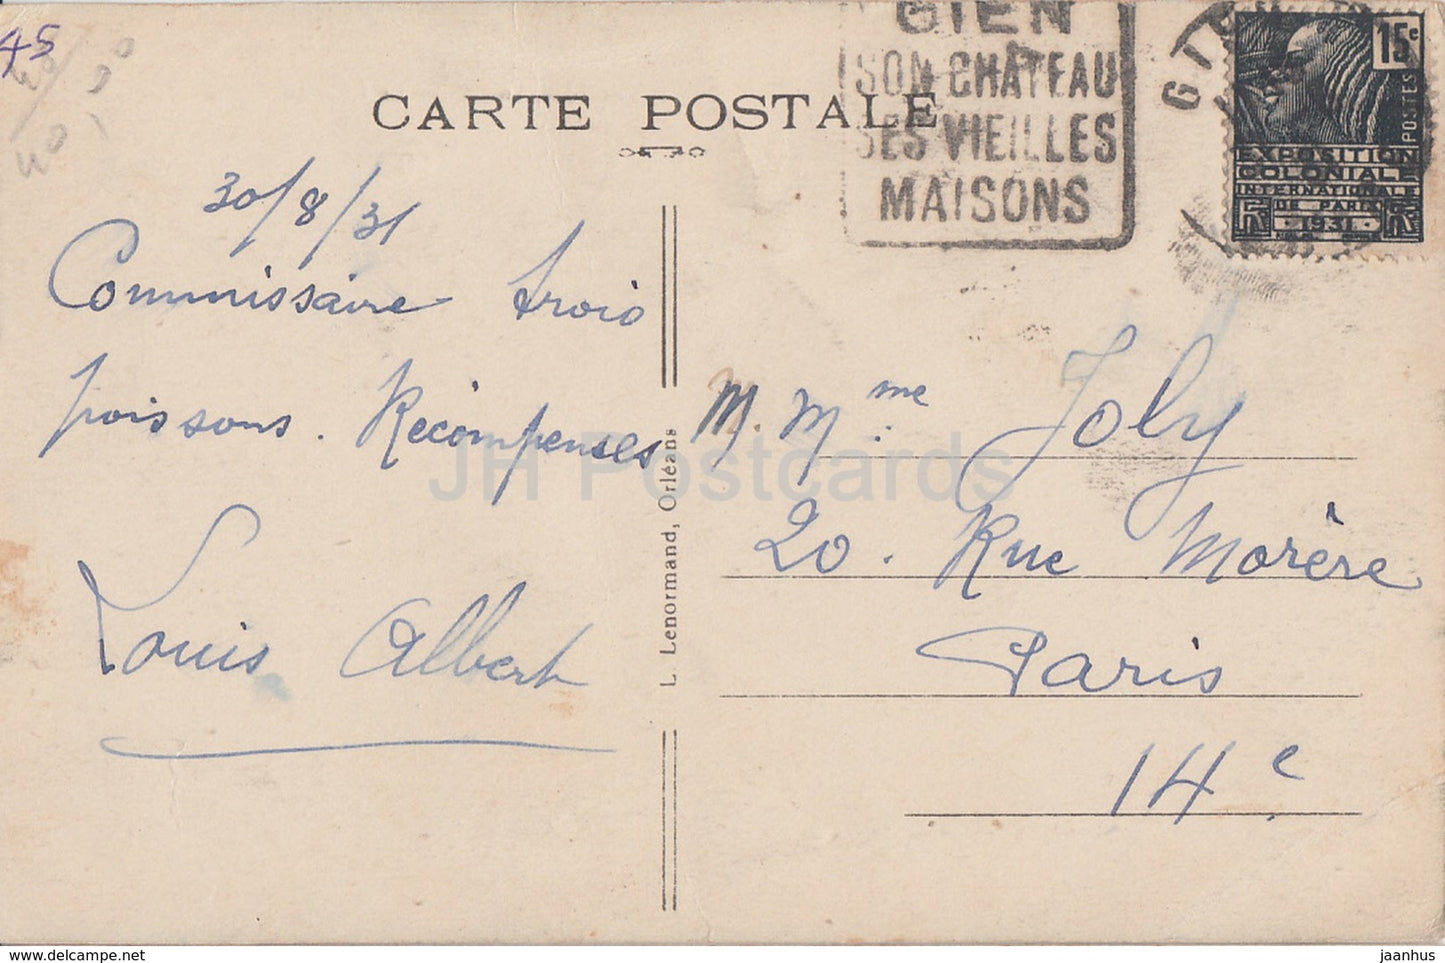 Gien - Le Chateau - castle - 3601 - old postcard - 1931 - France - used